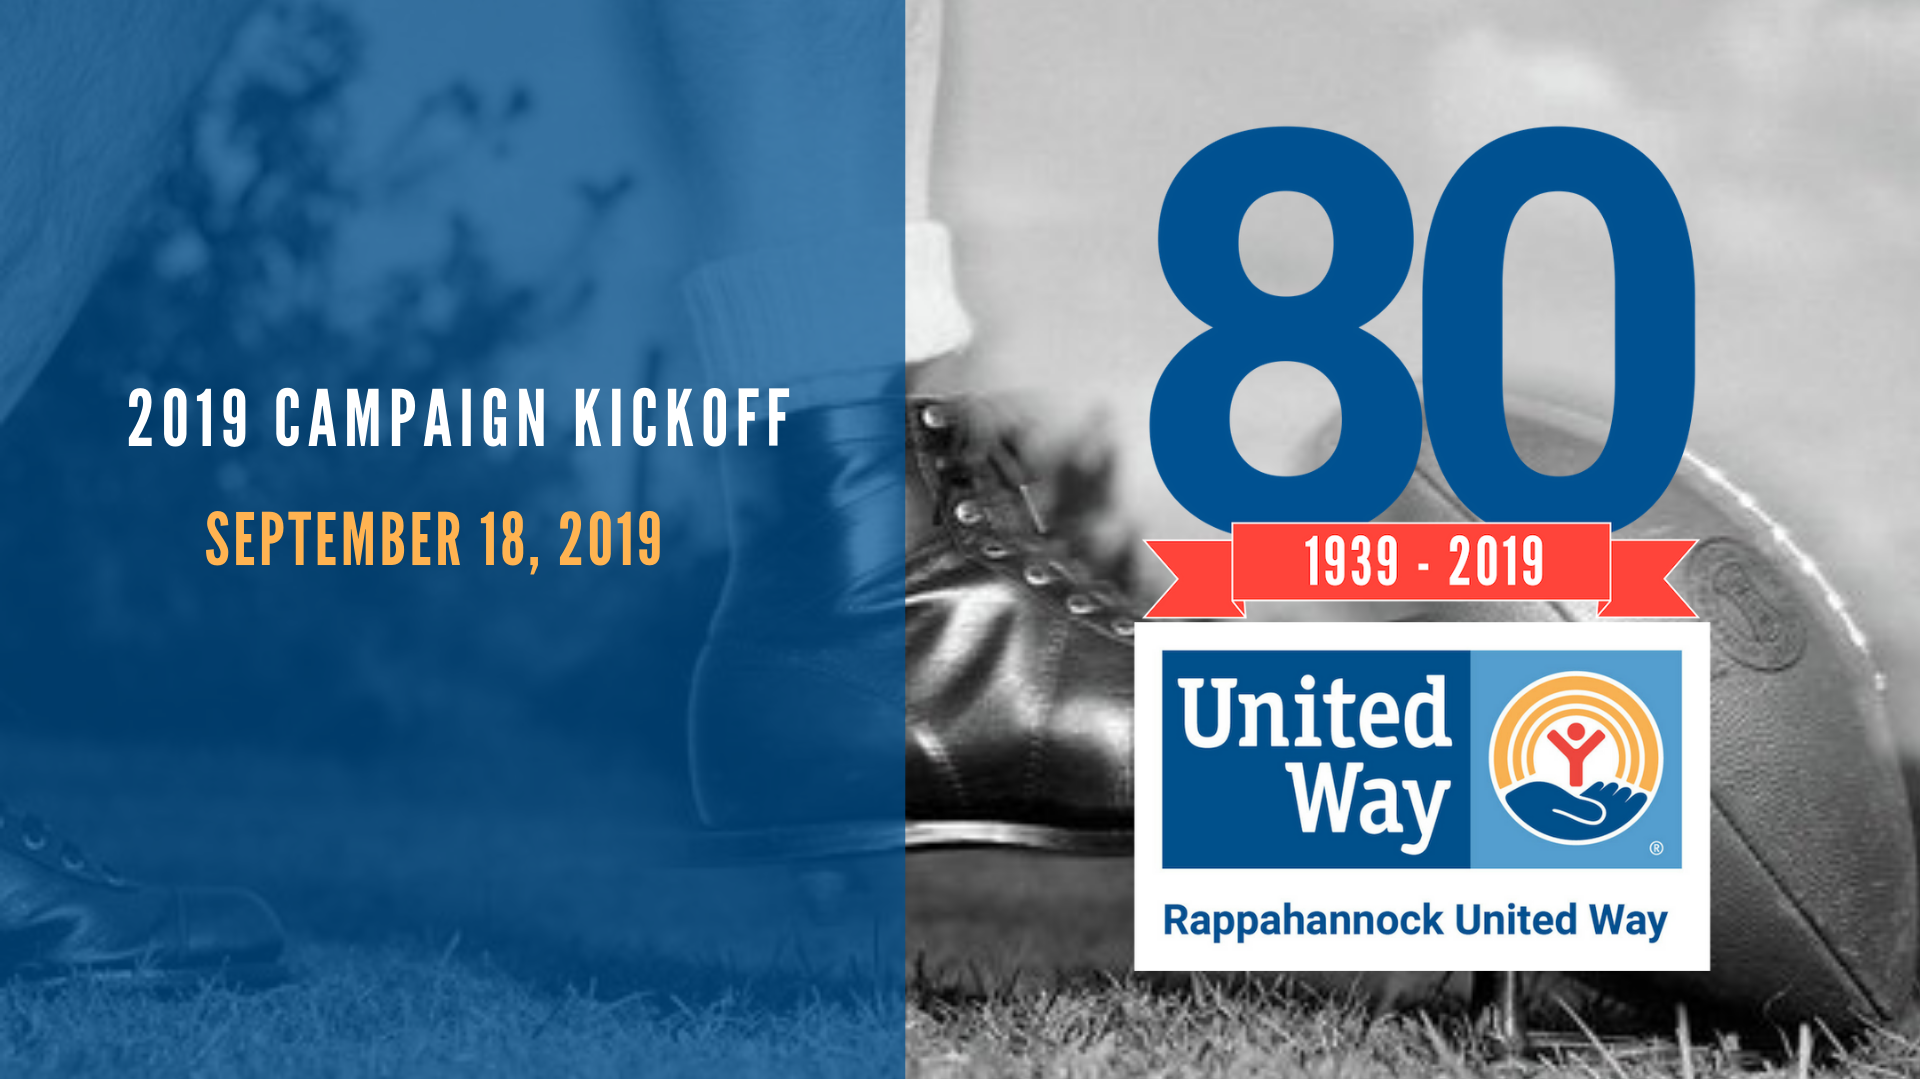 2019 campaign kickoff september 18, 2019